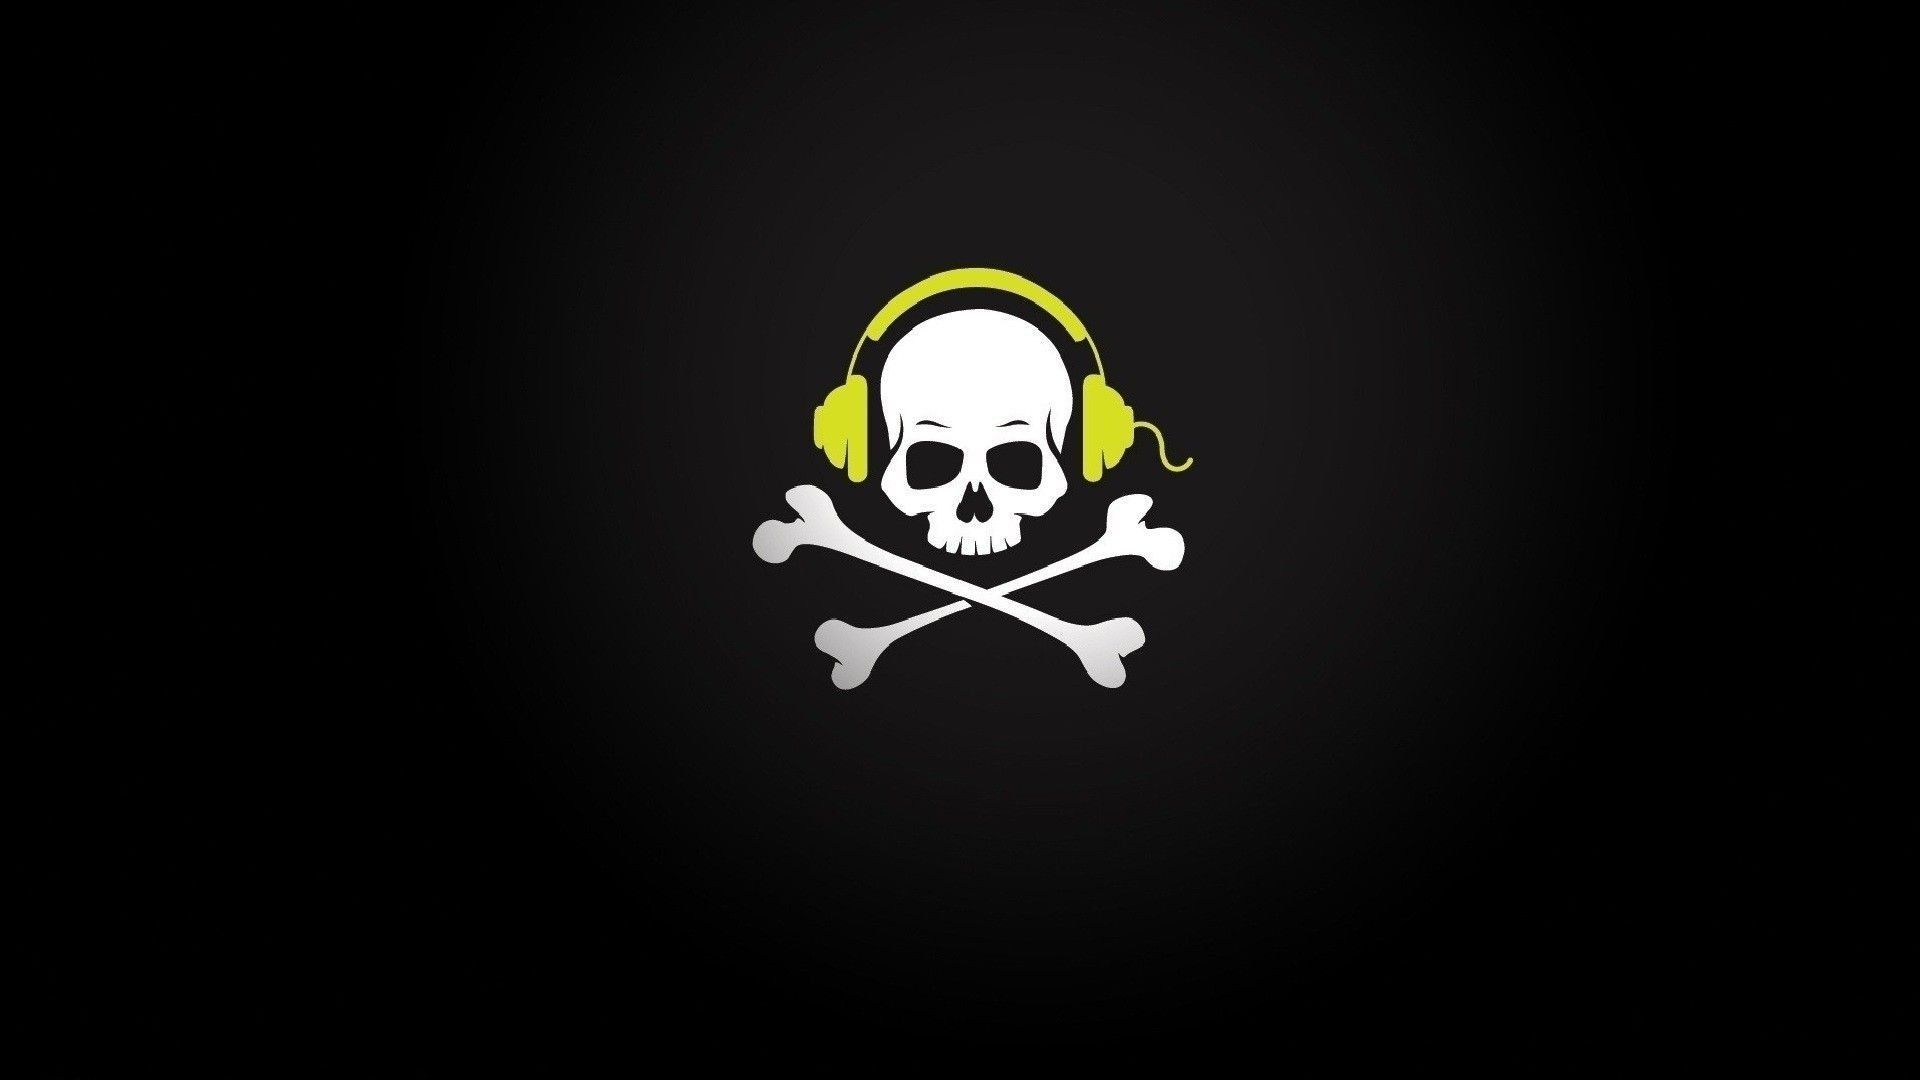 Skull with Headphones Wallpaper Free Skull with Headphones